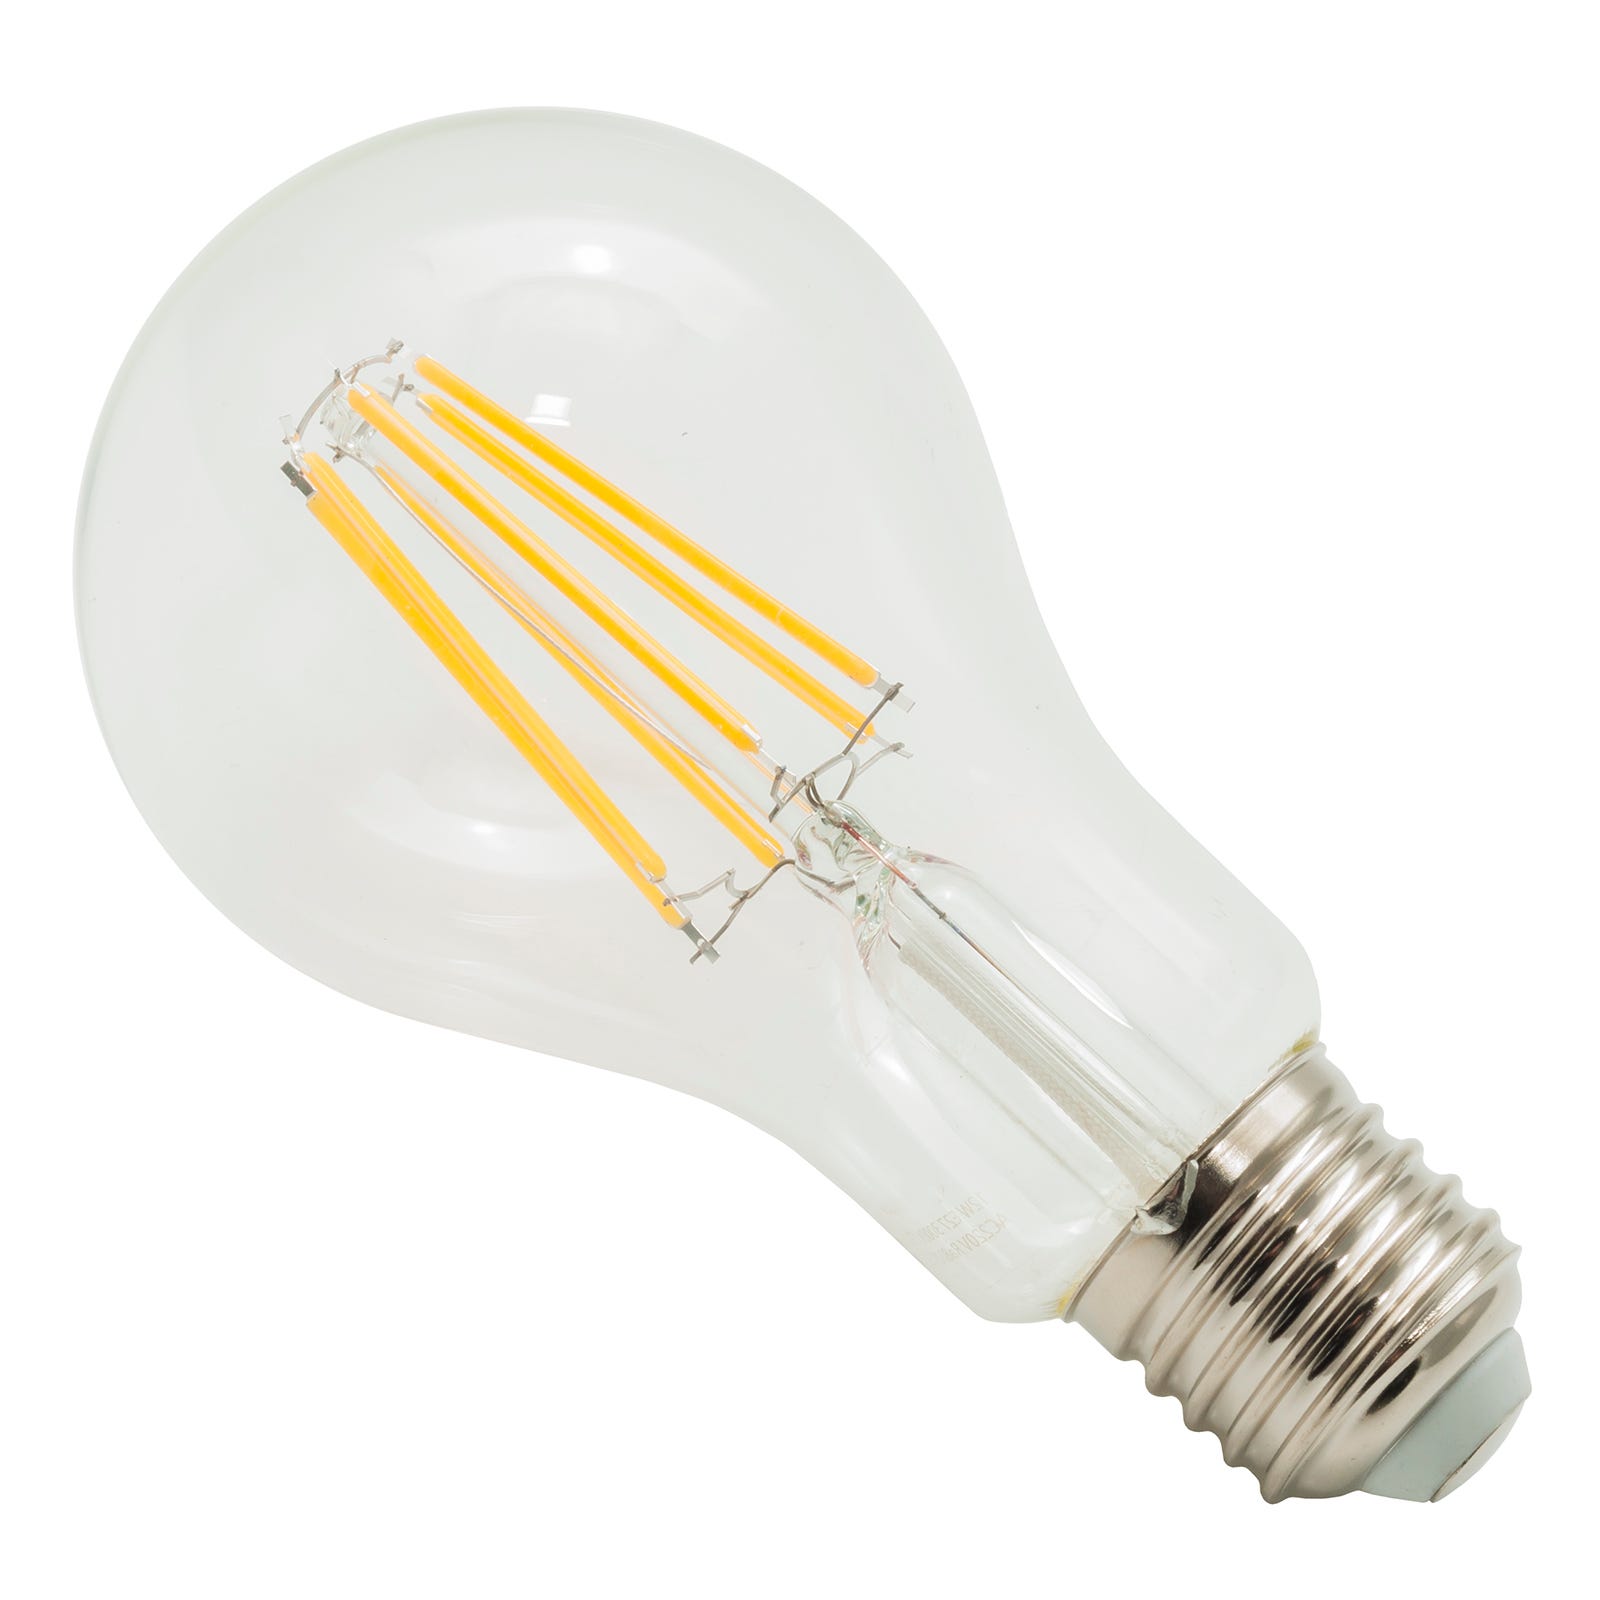 Bombilla LED E27 globo pera vidrio 12W lámpara filamento vintage